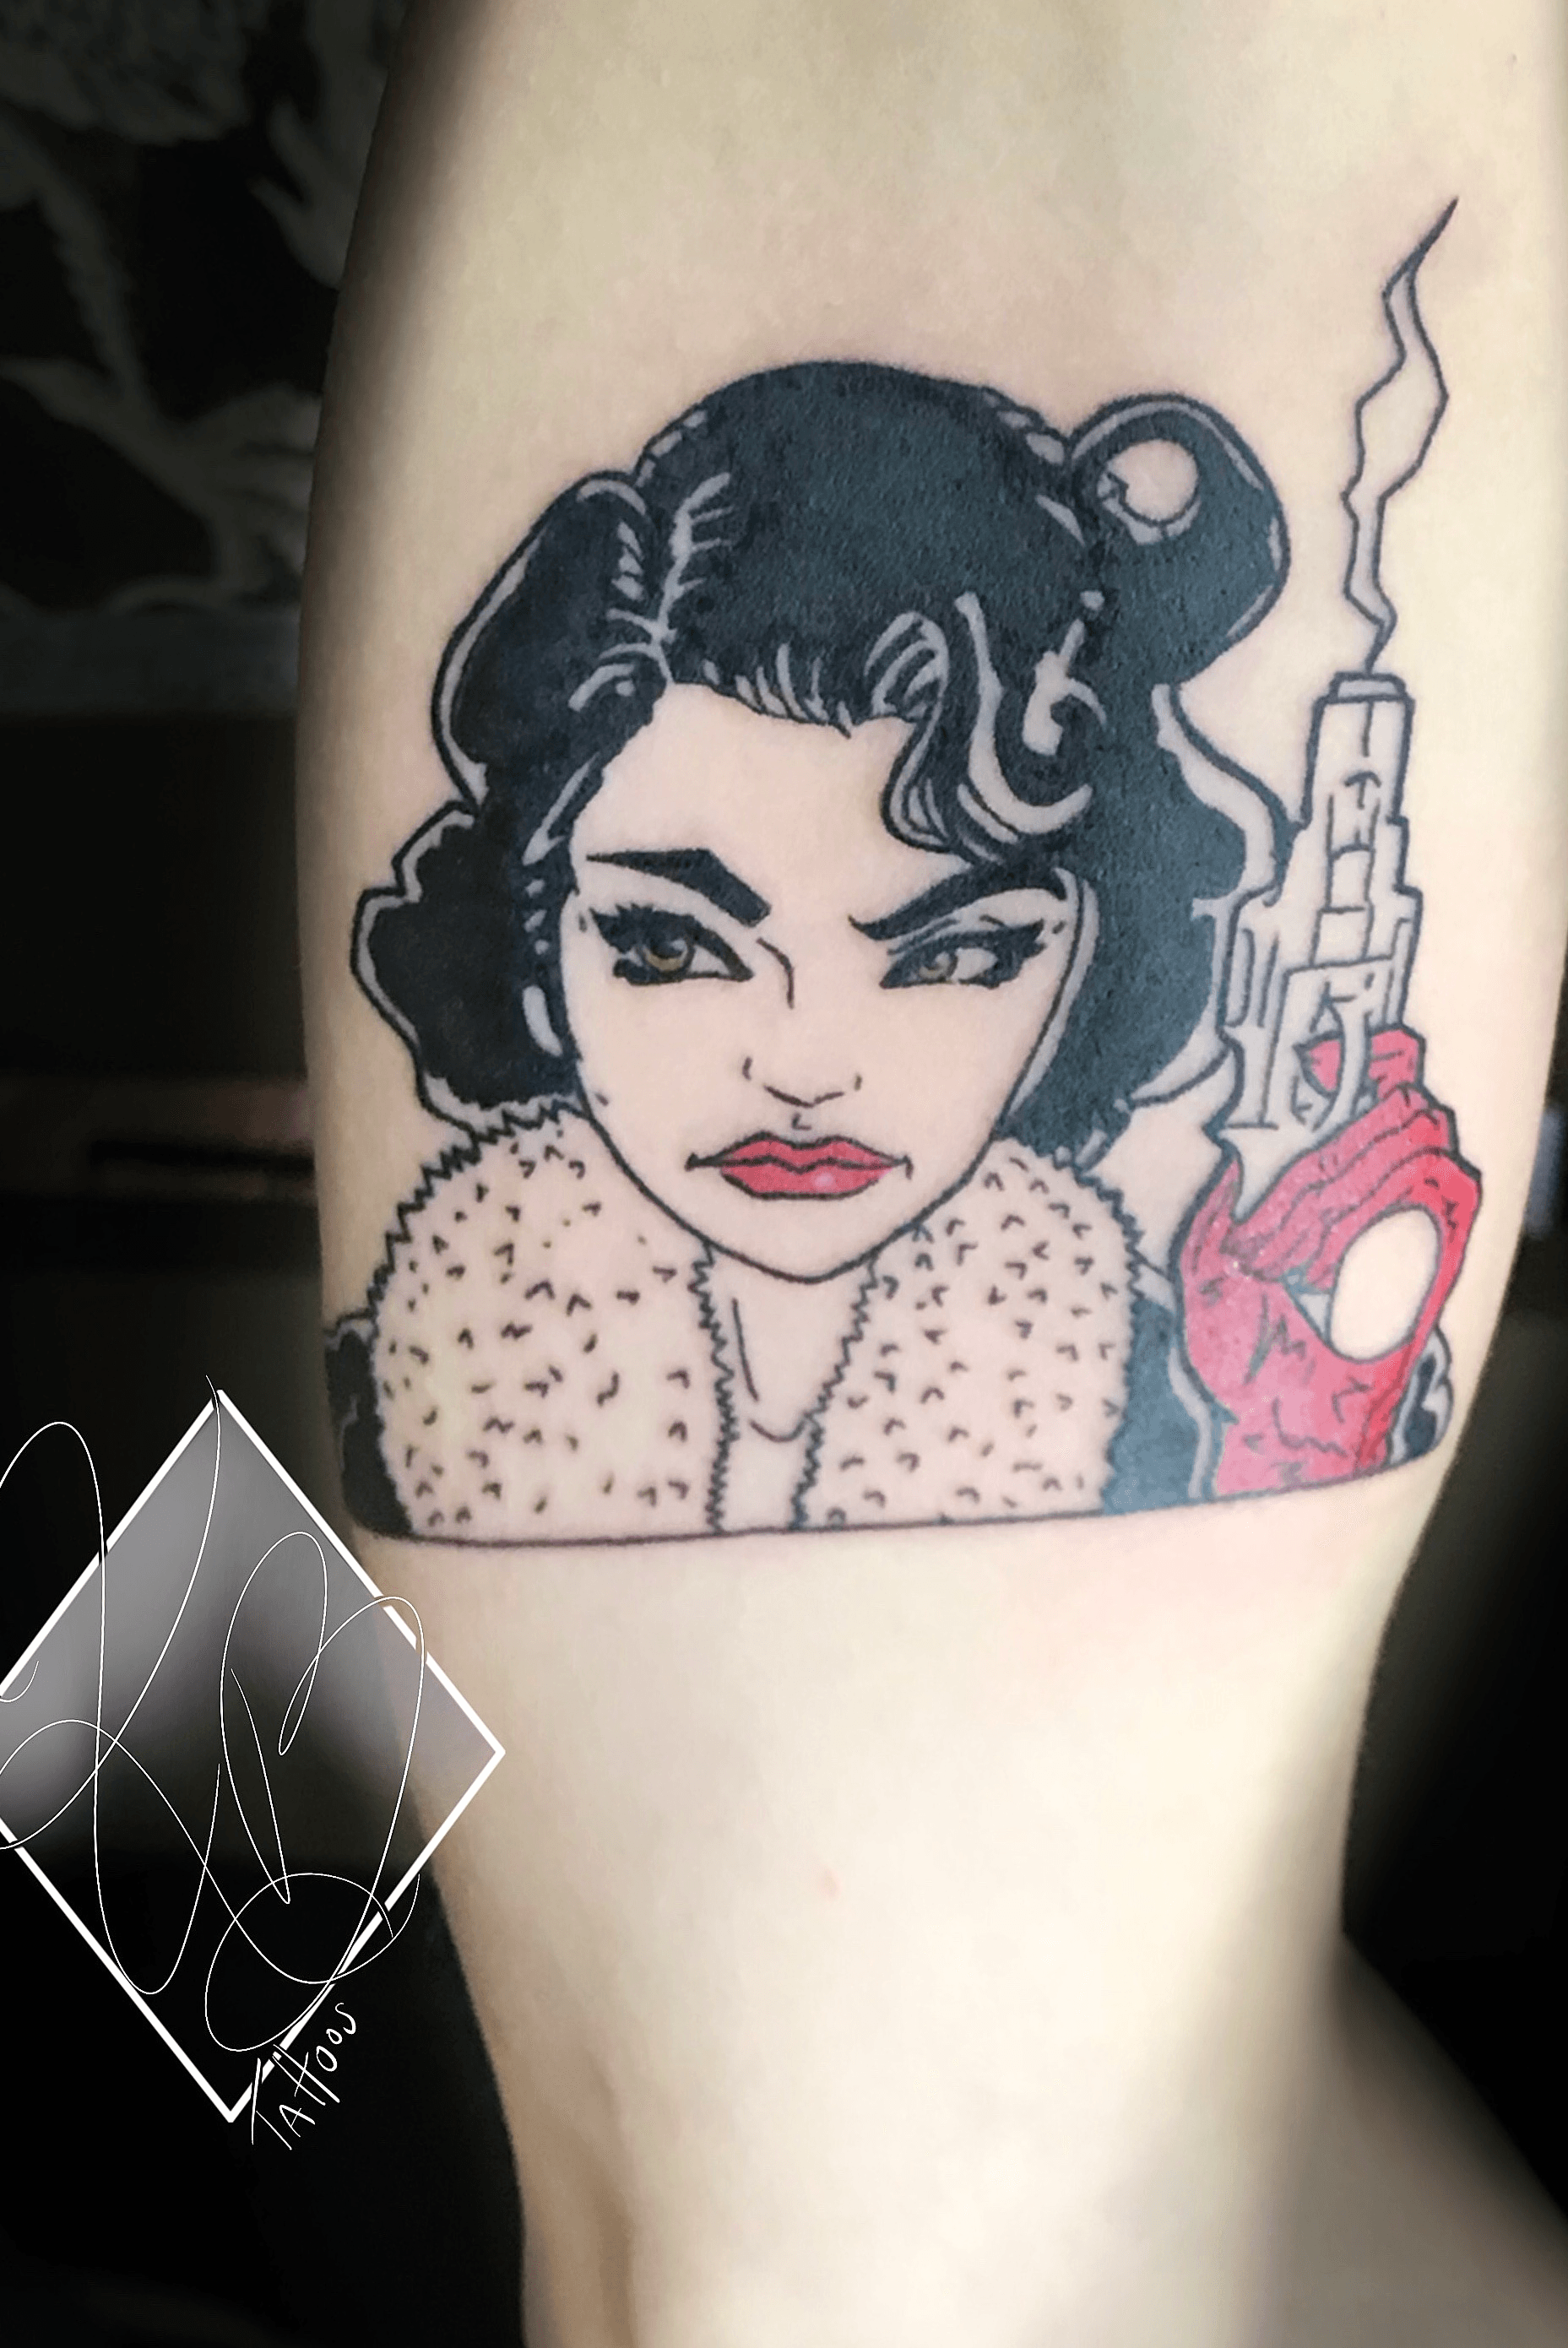 SebastianStevie Licks on Twitter stasneybaby Exactly why i love my Violet  Chachki pinup tattoo so much  httpstcoQmwdwYjUM7  Twitter